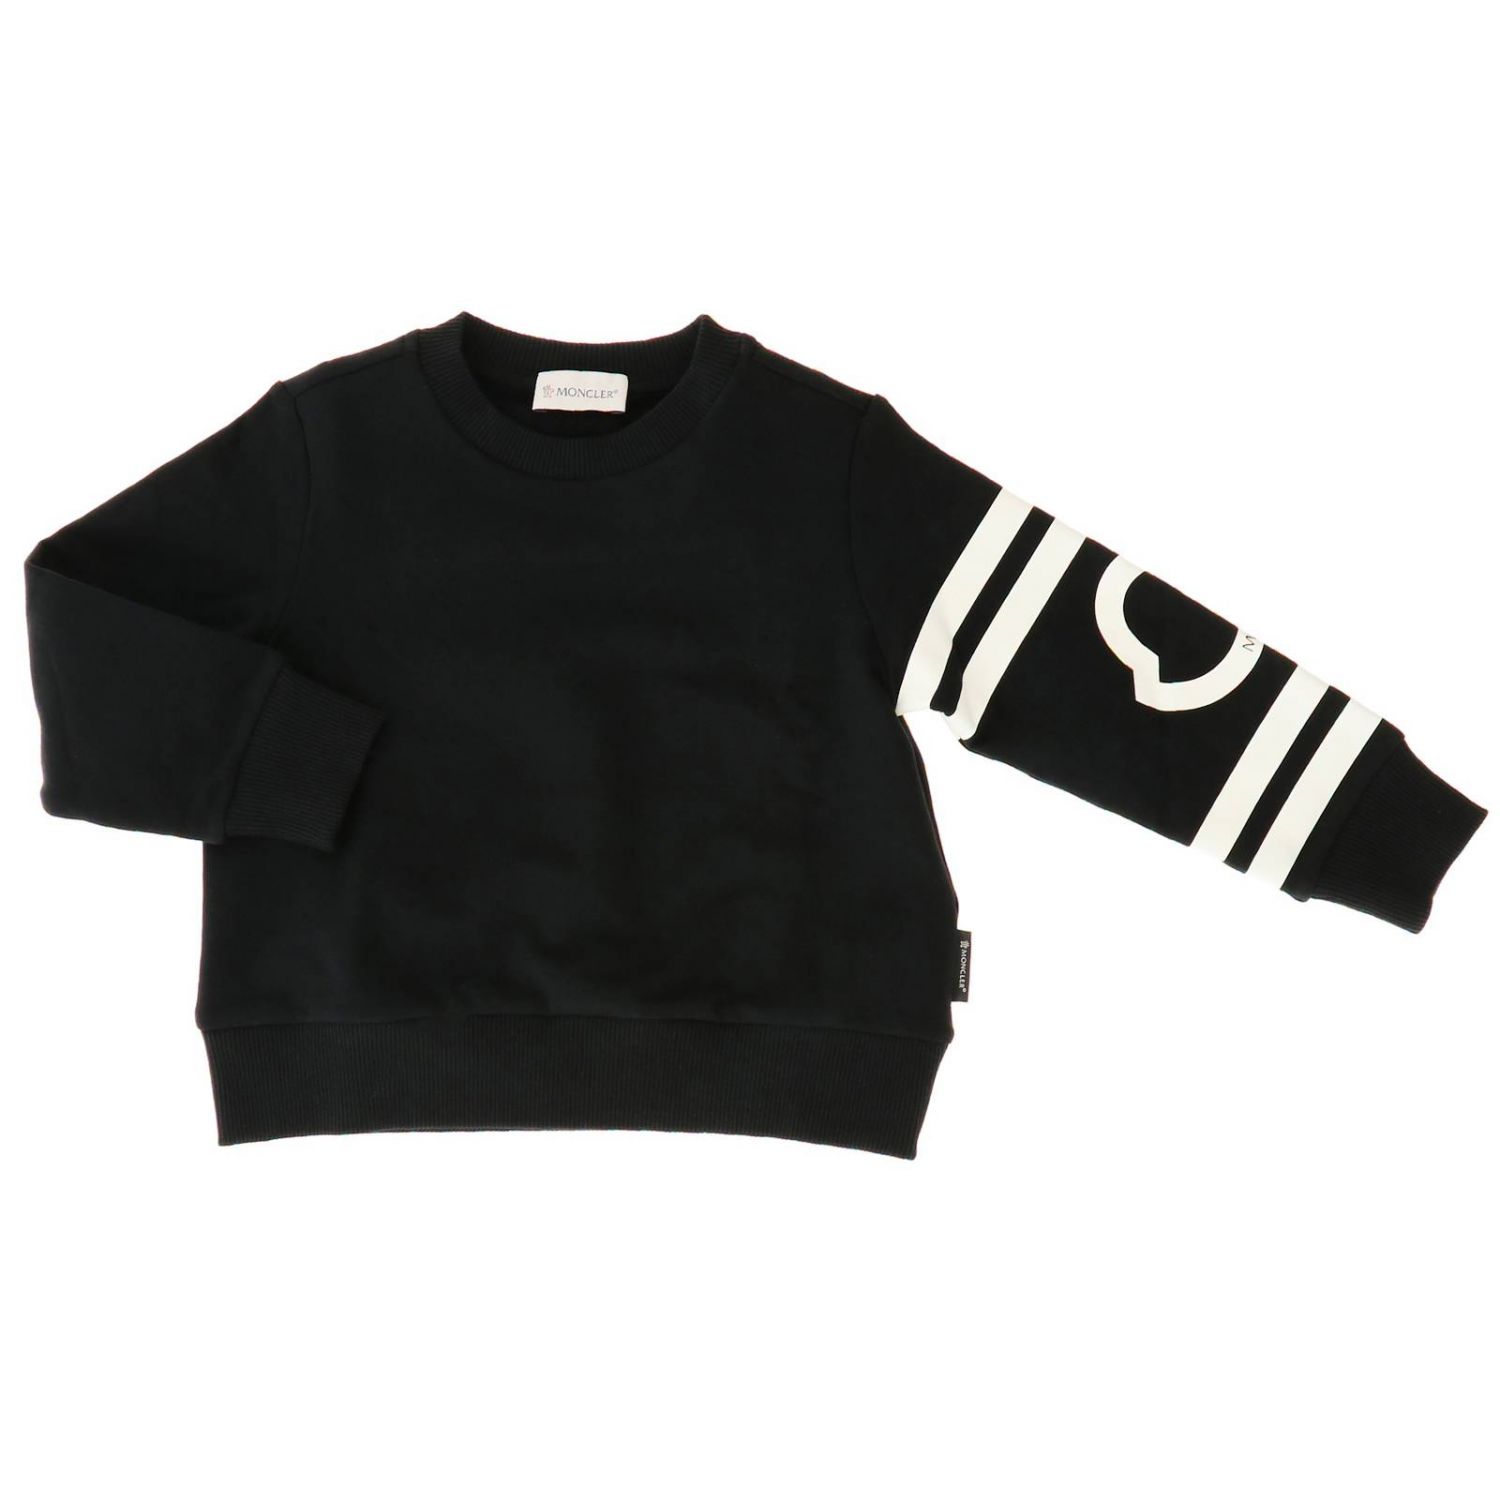 moncler black sweater